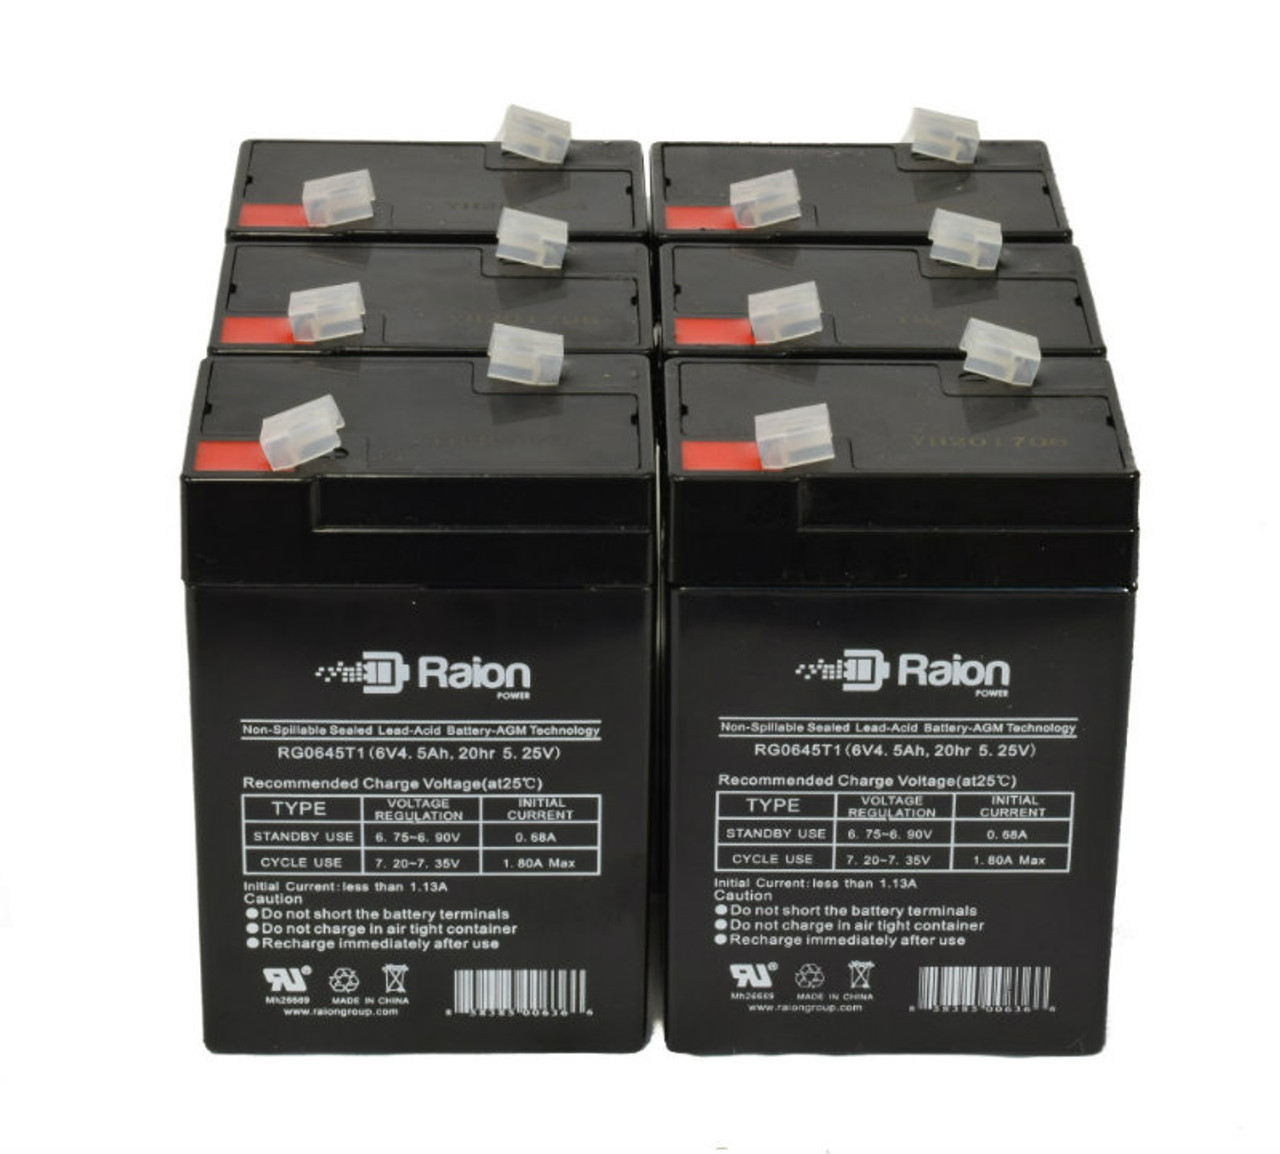 Raion Power 6 Volt 4.5Ah RG0645T1 Replacement Battery for Sonnenschein A206/3.8K - 6 Pack